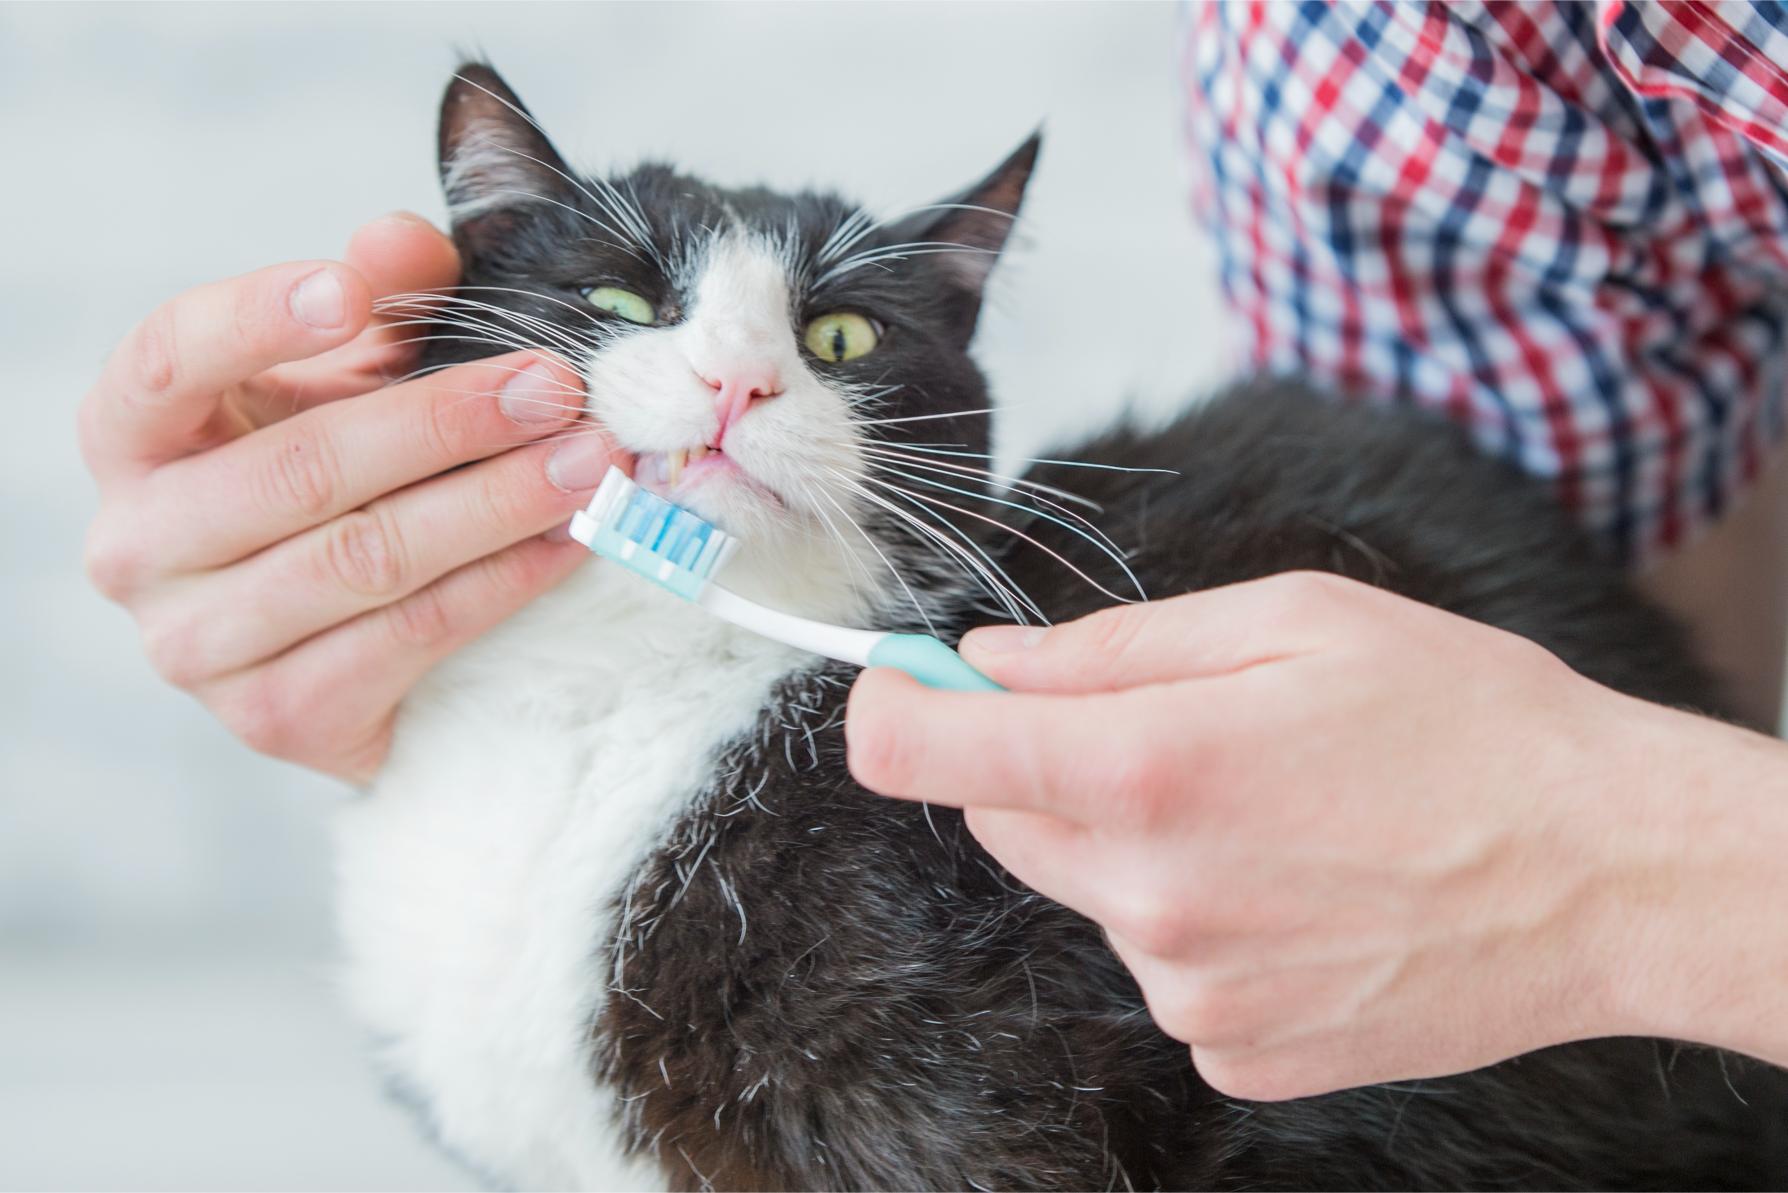 Brushing cat's teeth.